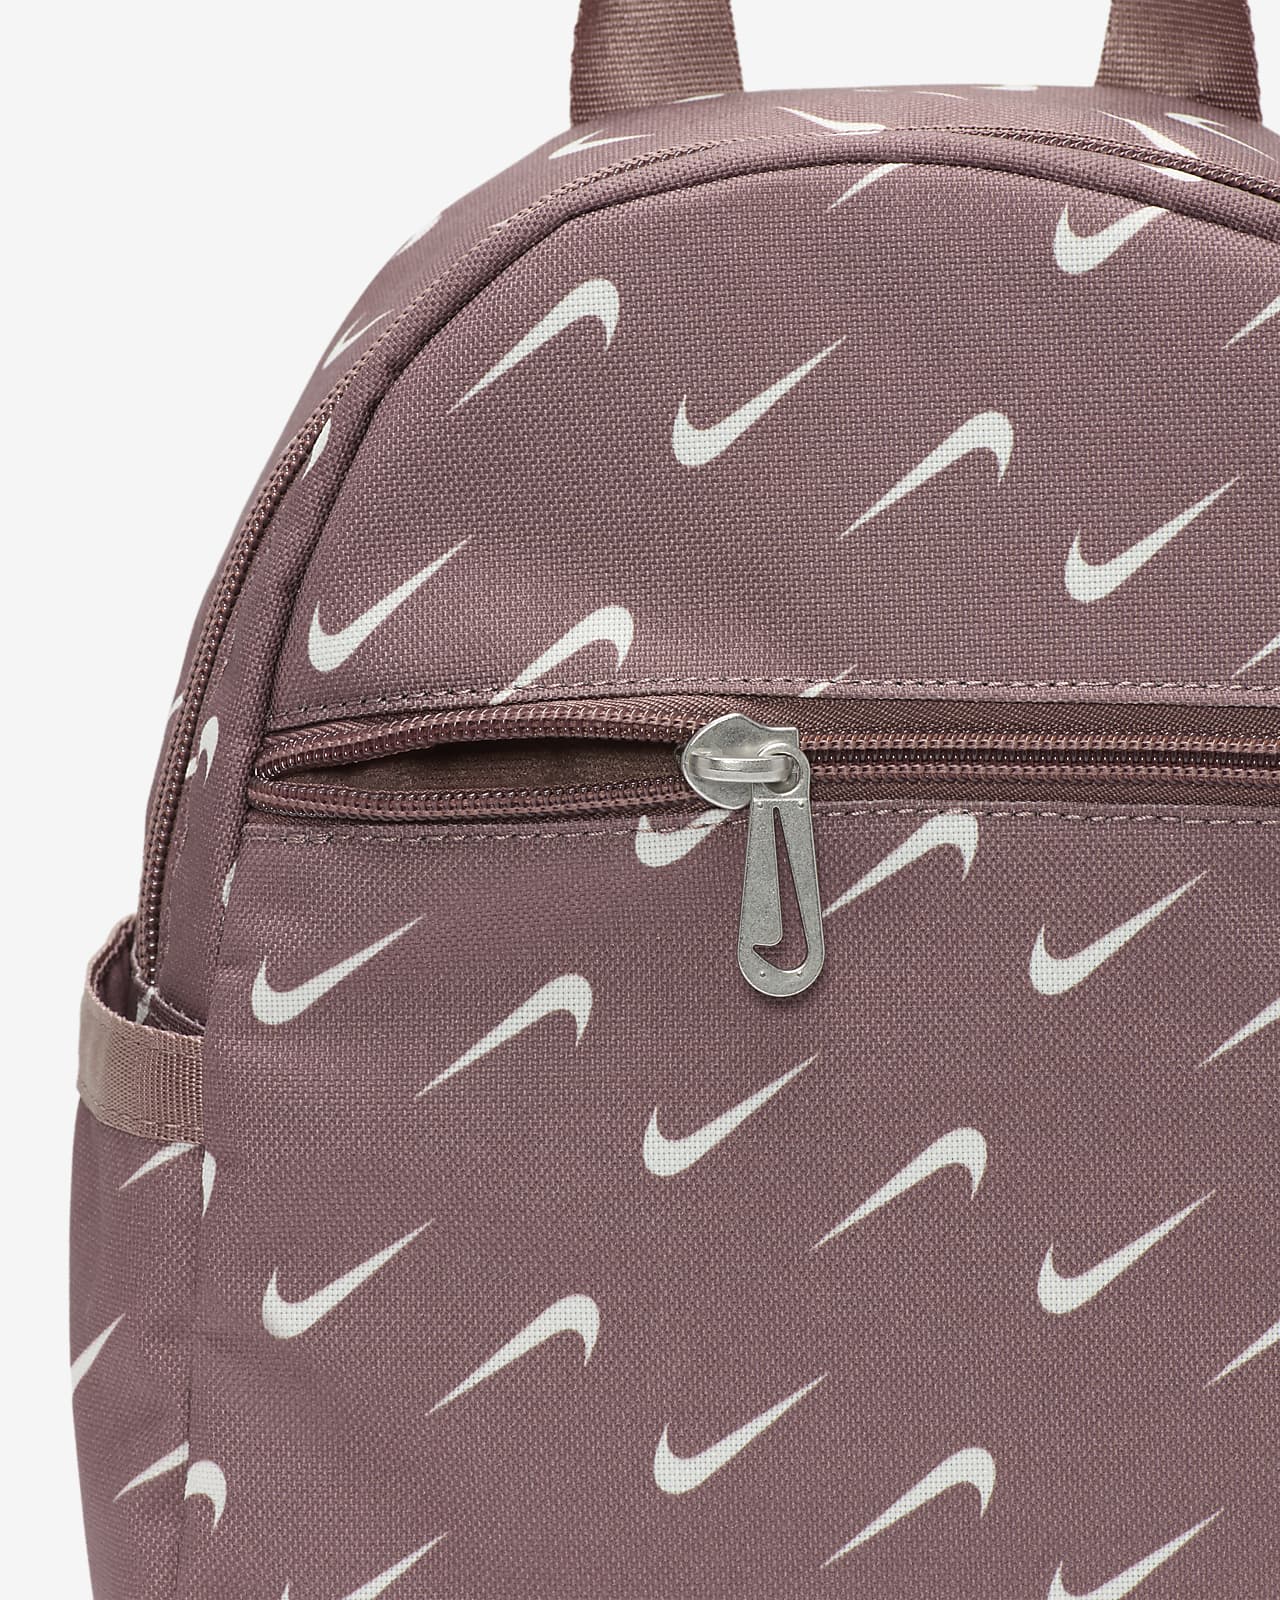 Buy B&E LIFE Fashion Shoulder Bag Rucksack PU Leather Women Girls Ladies  Backpack Travel bag, Black Small at Amazon.in